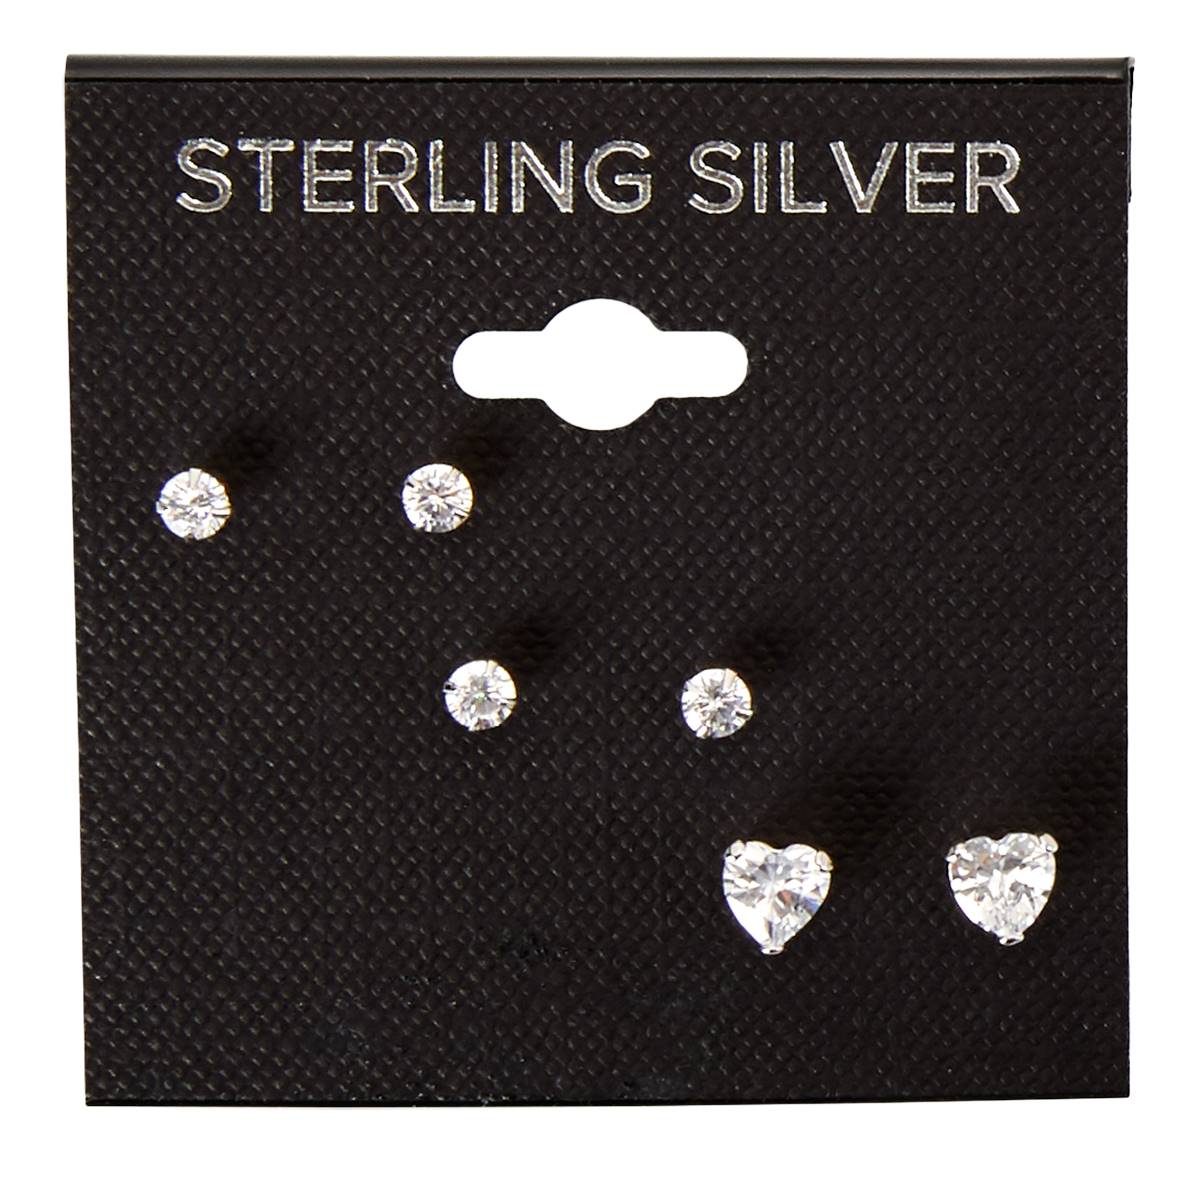 Sterling Silver Trio Stud Earring Set